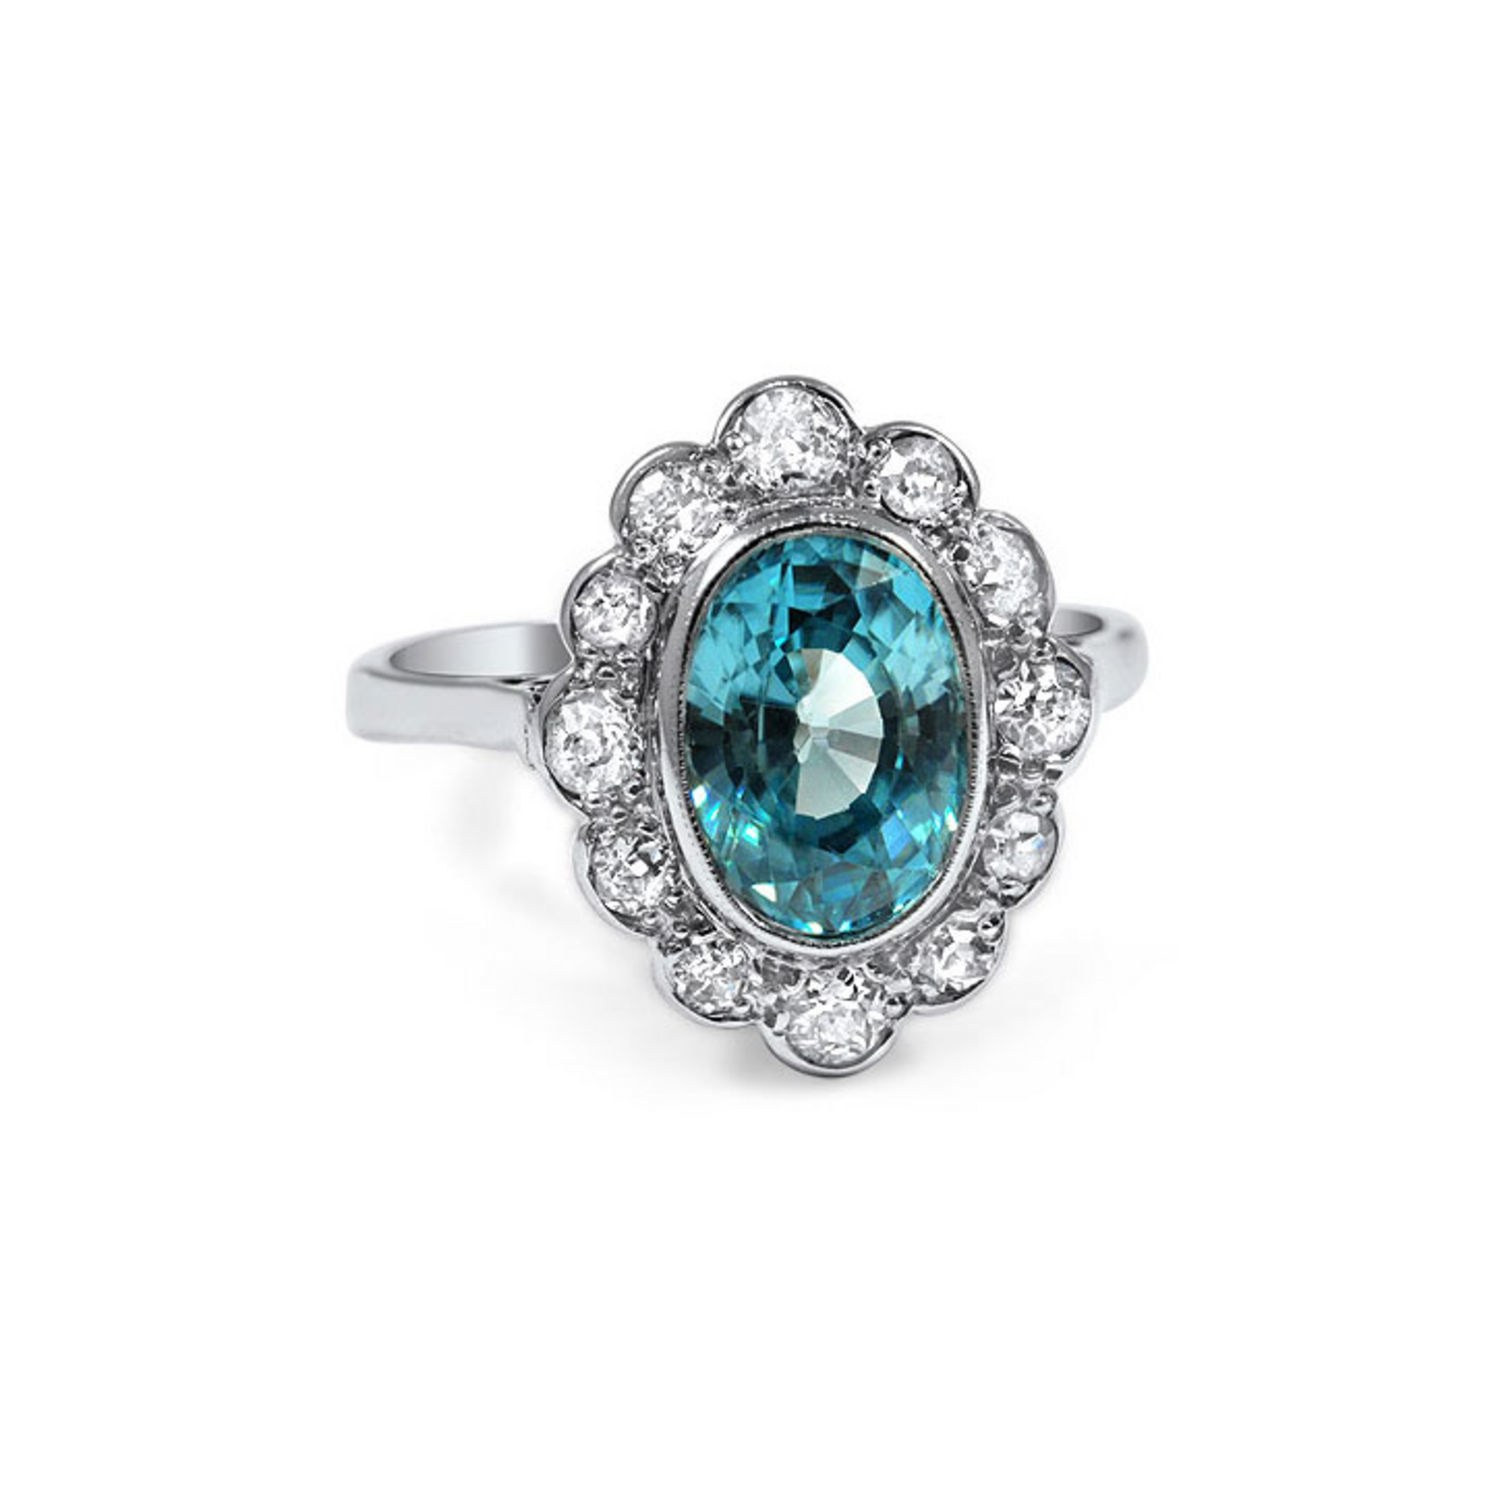 Colored Diamond Wedding Rings
 Unique Engagement Rings Colored Gemstone Engagement Rings